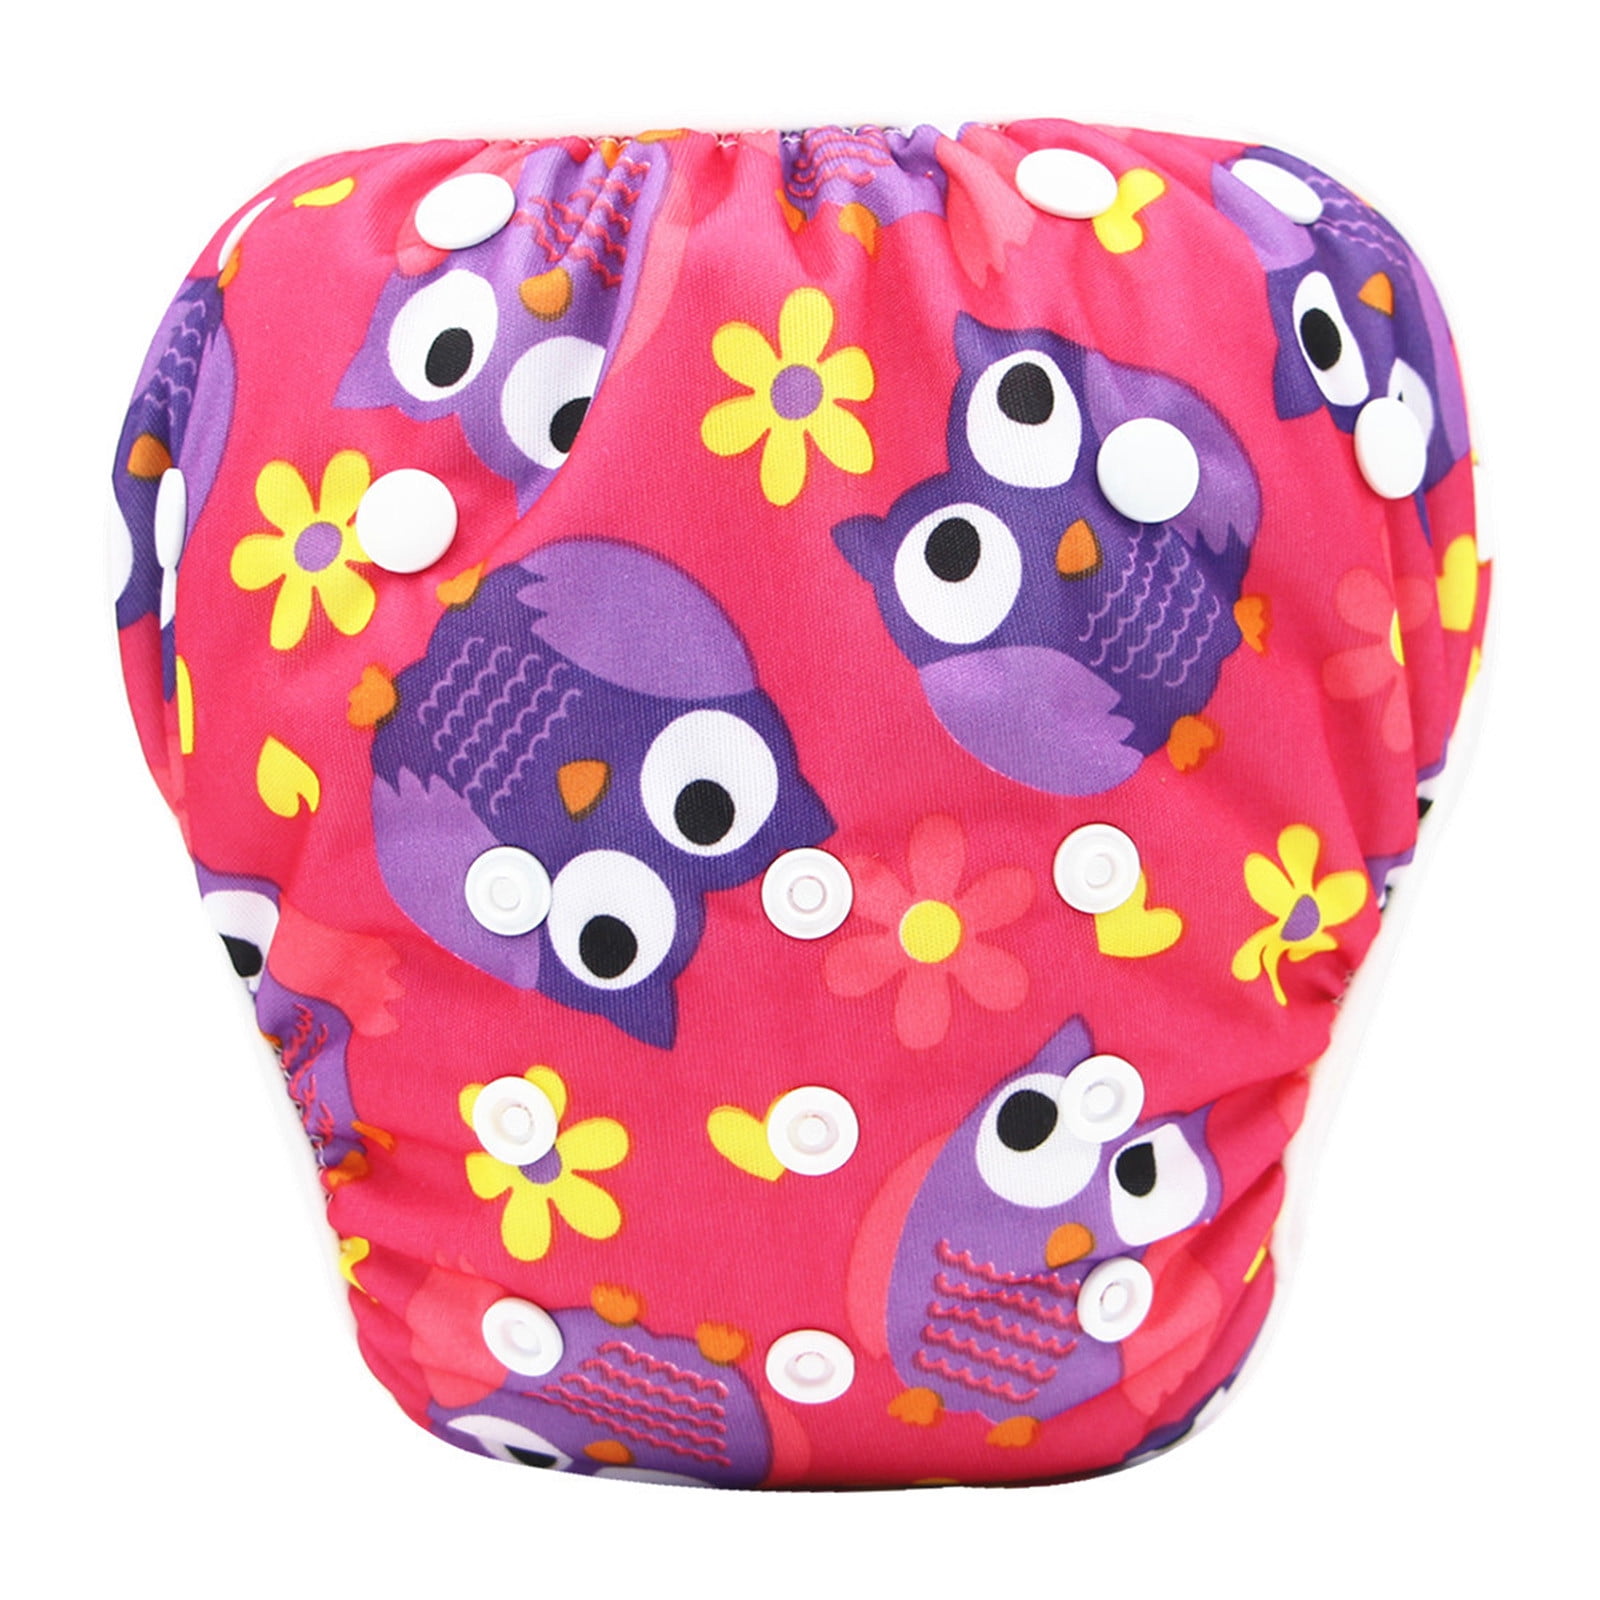 Cealu Adjustable Reusable Swim Diaper for Toddler Baby Boy Girl Cute Cartoon Print Elastic Waist Baby Diaper Swim Trunks 